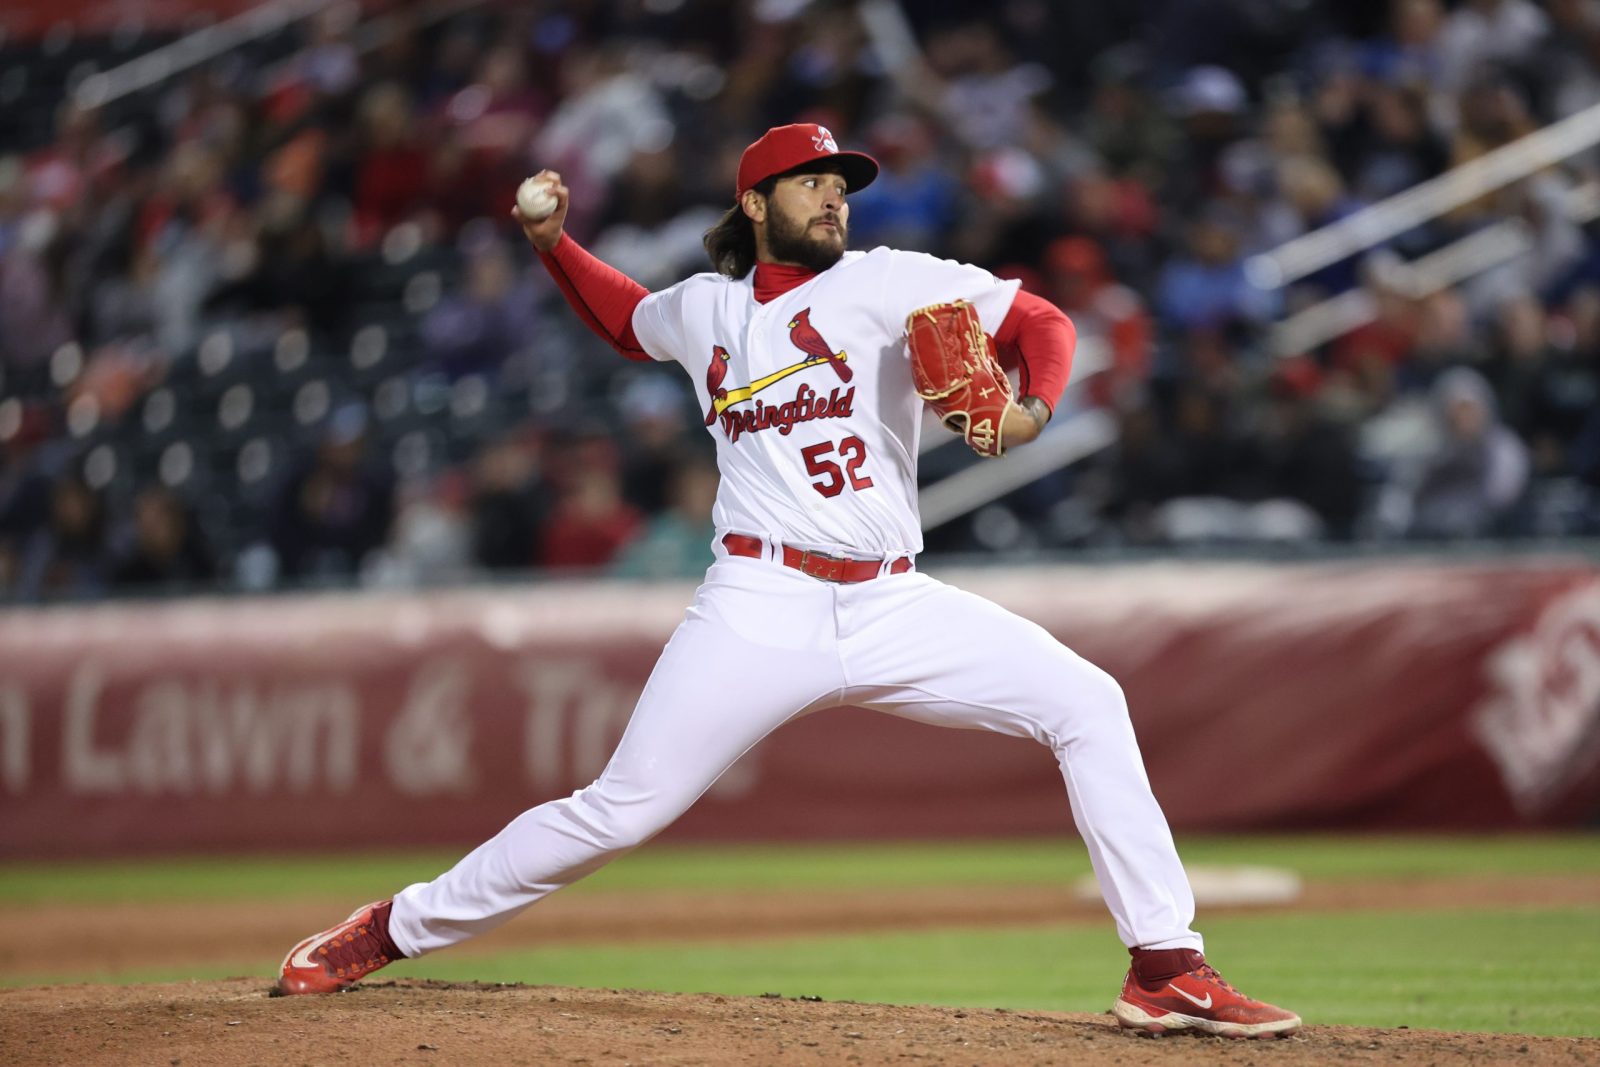 A baseball player wearing a Springfield Cardinals uniform pitches the ball